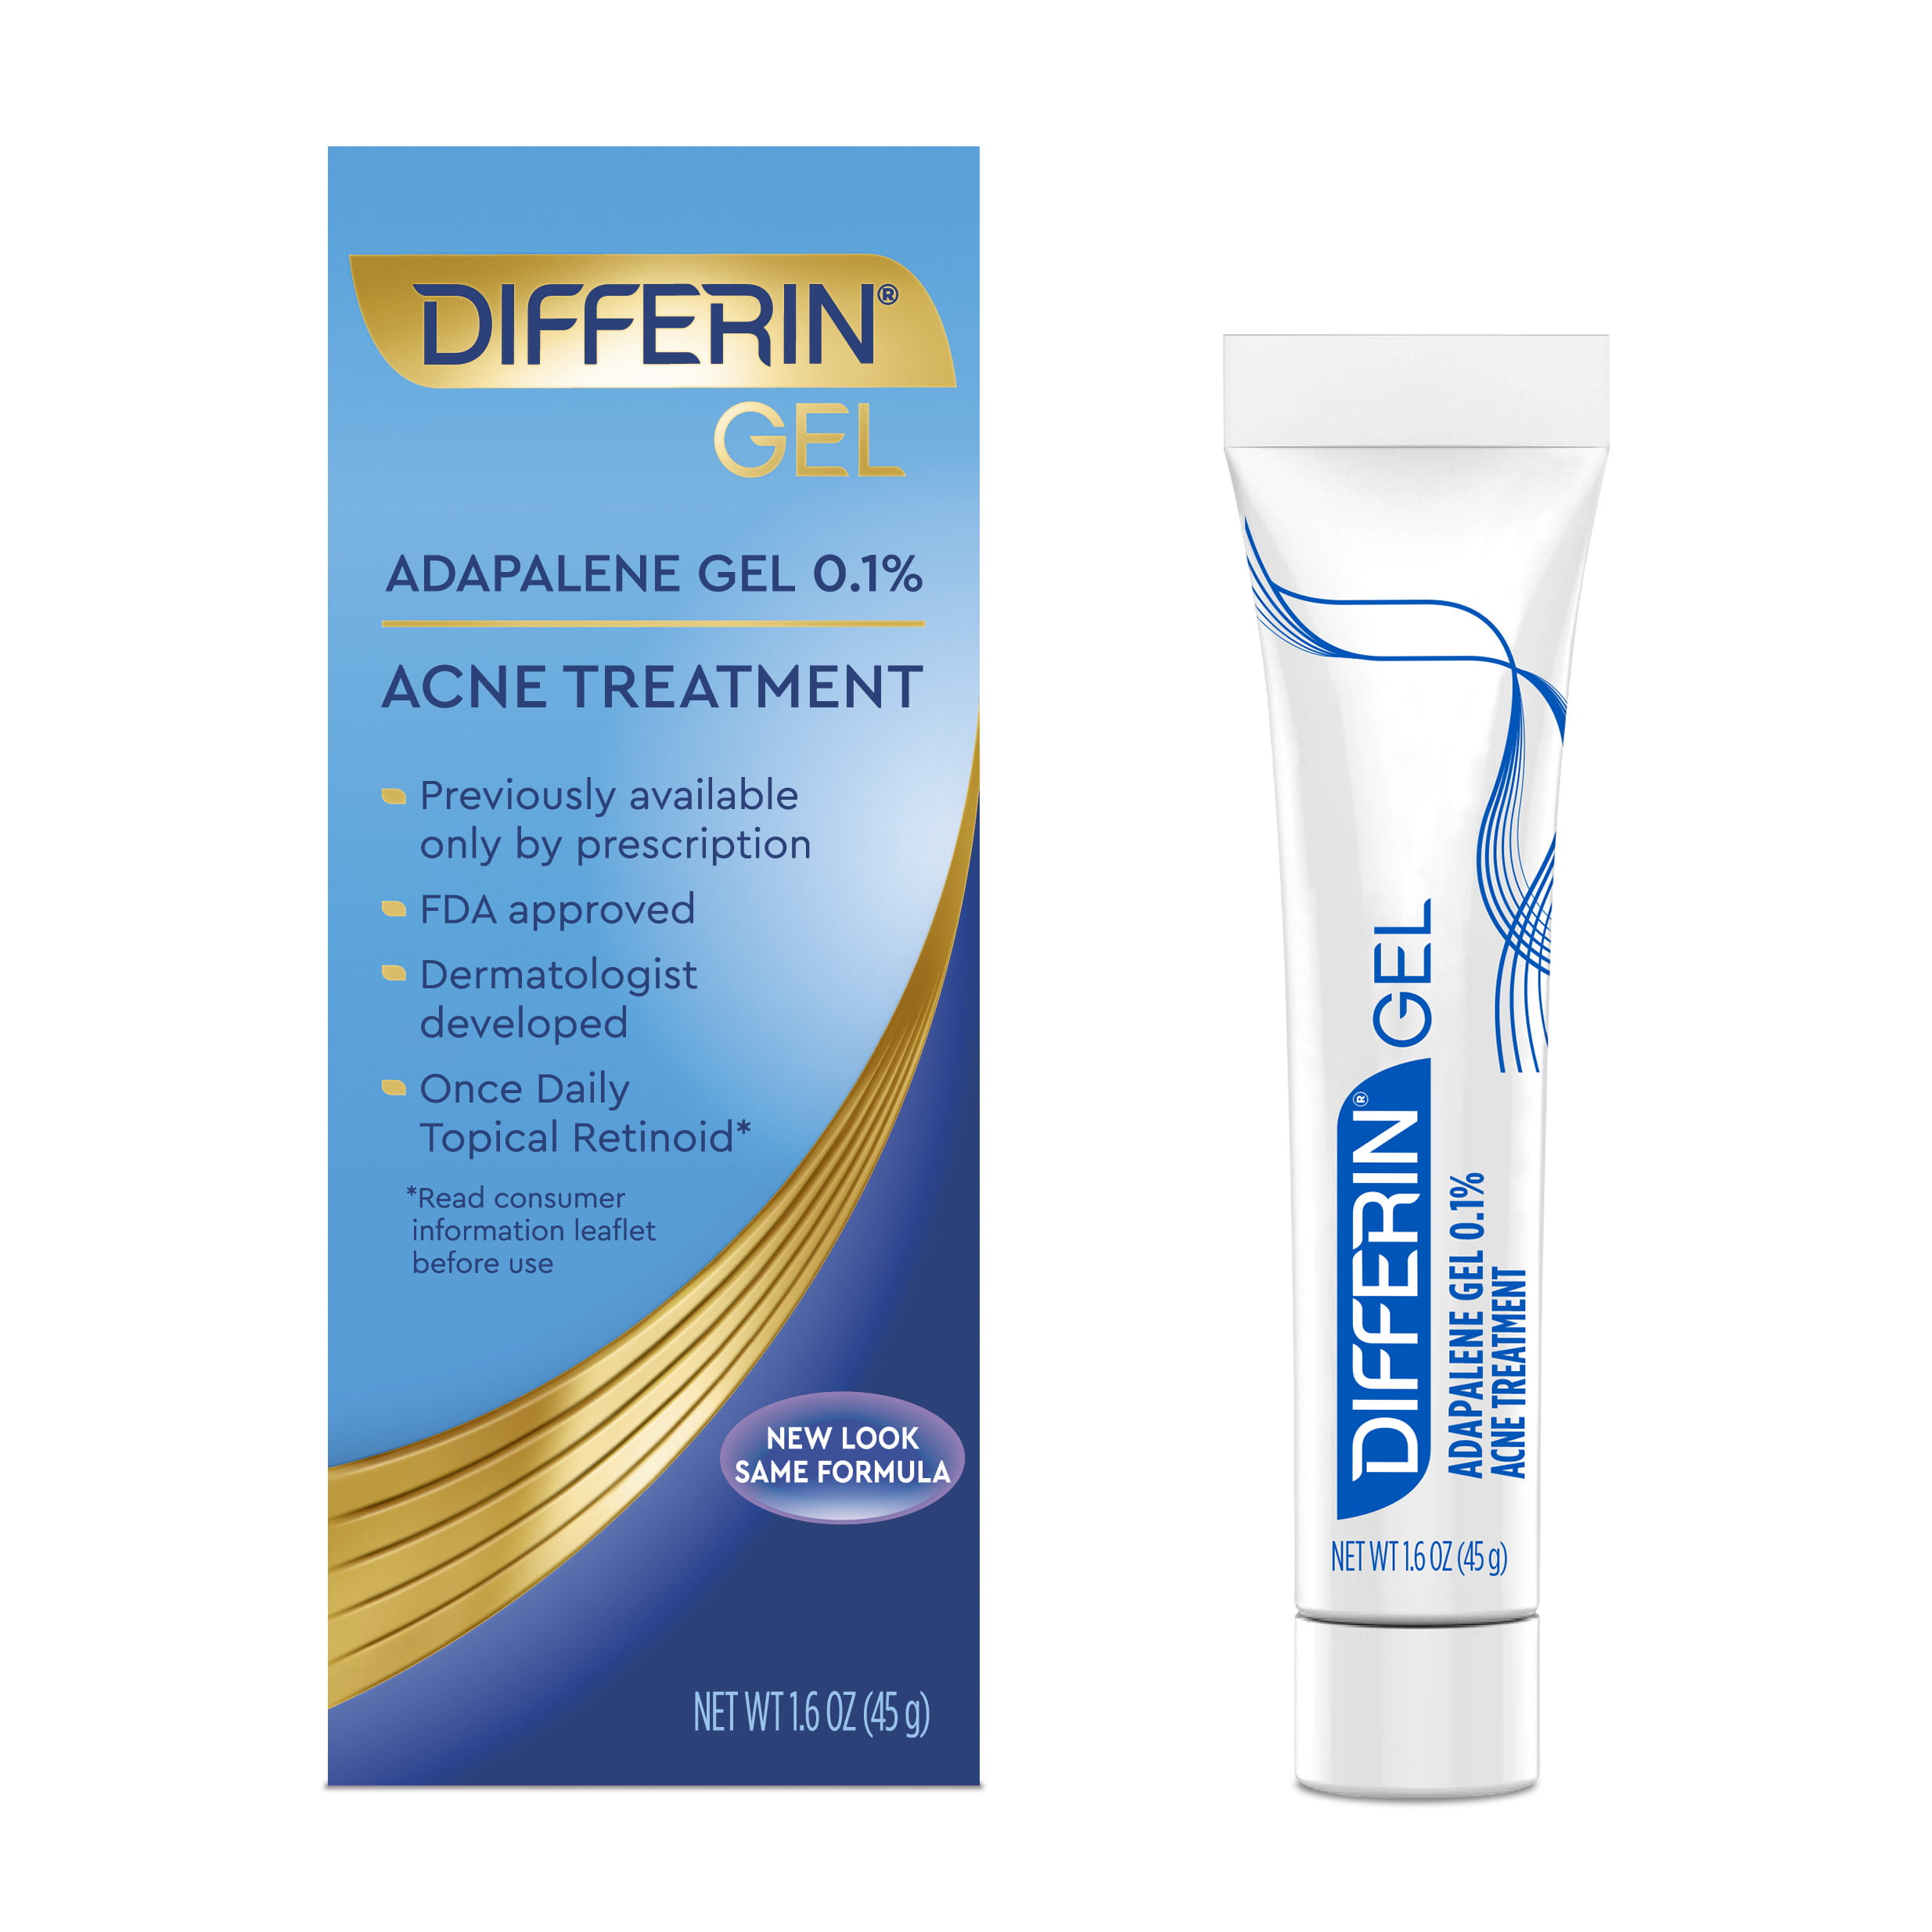 Differin Adapalene Gel 0.1% Acne Treatment - Walmart.com